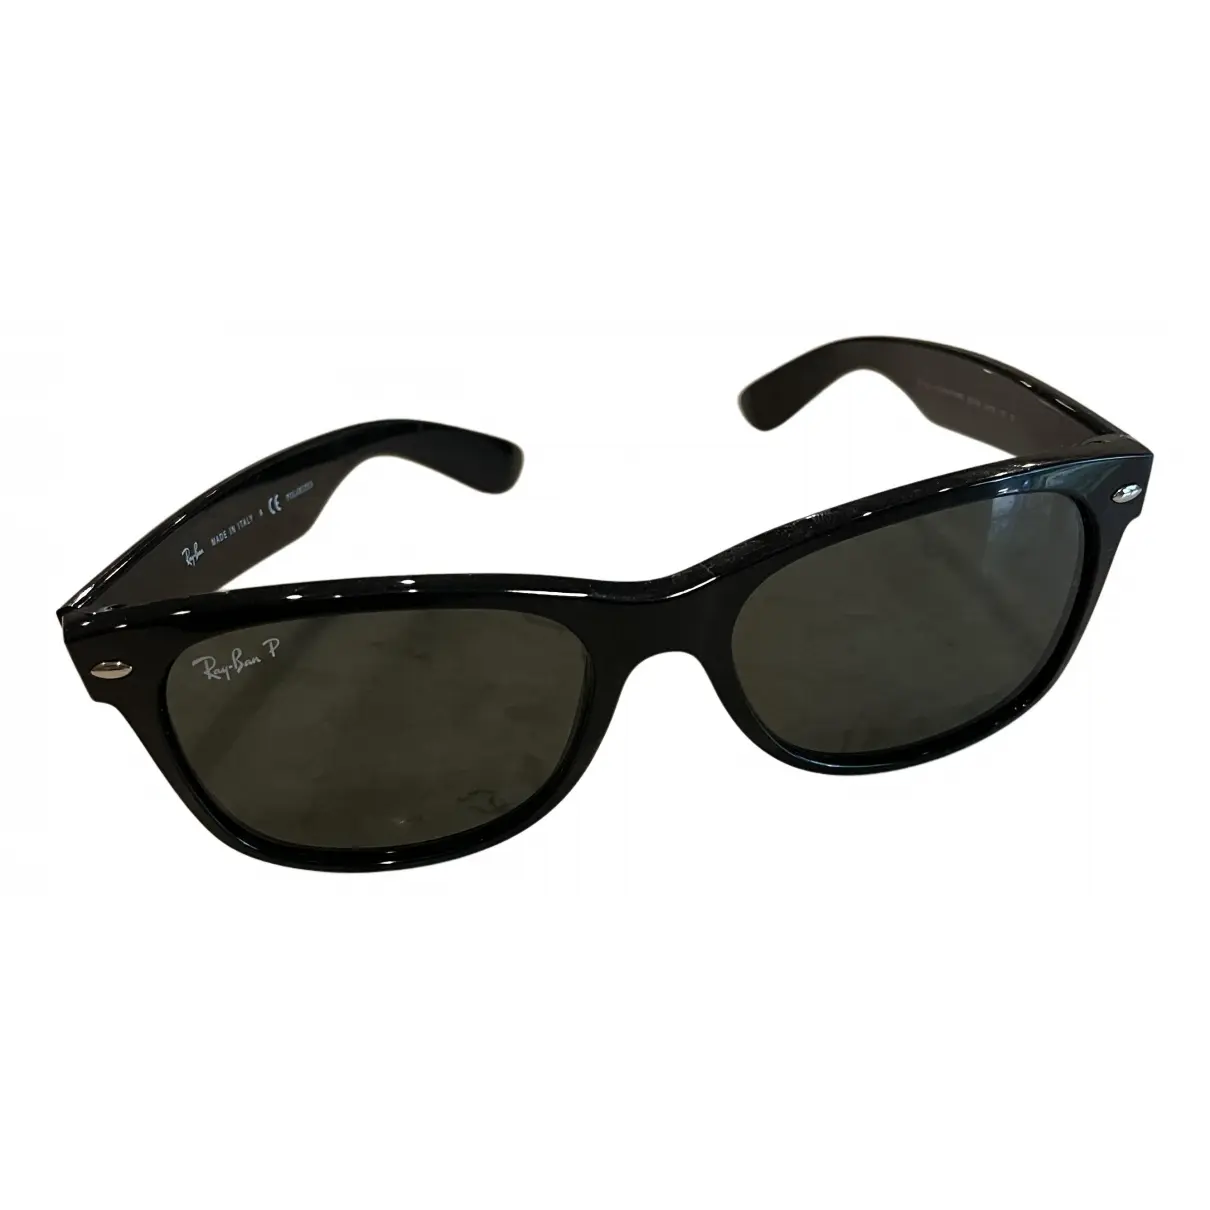 New Wayfarer sunglasses Ray-Ban